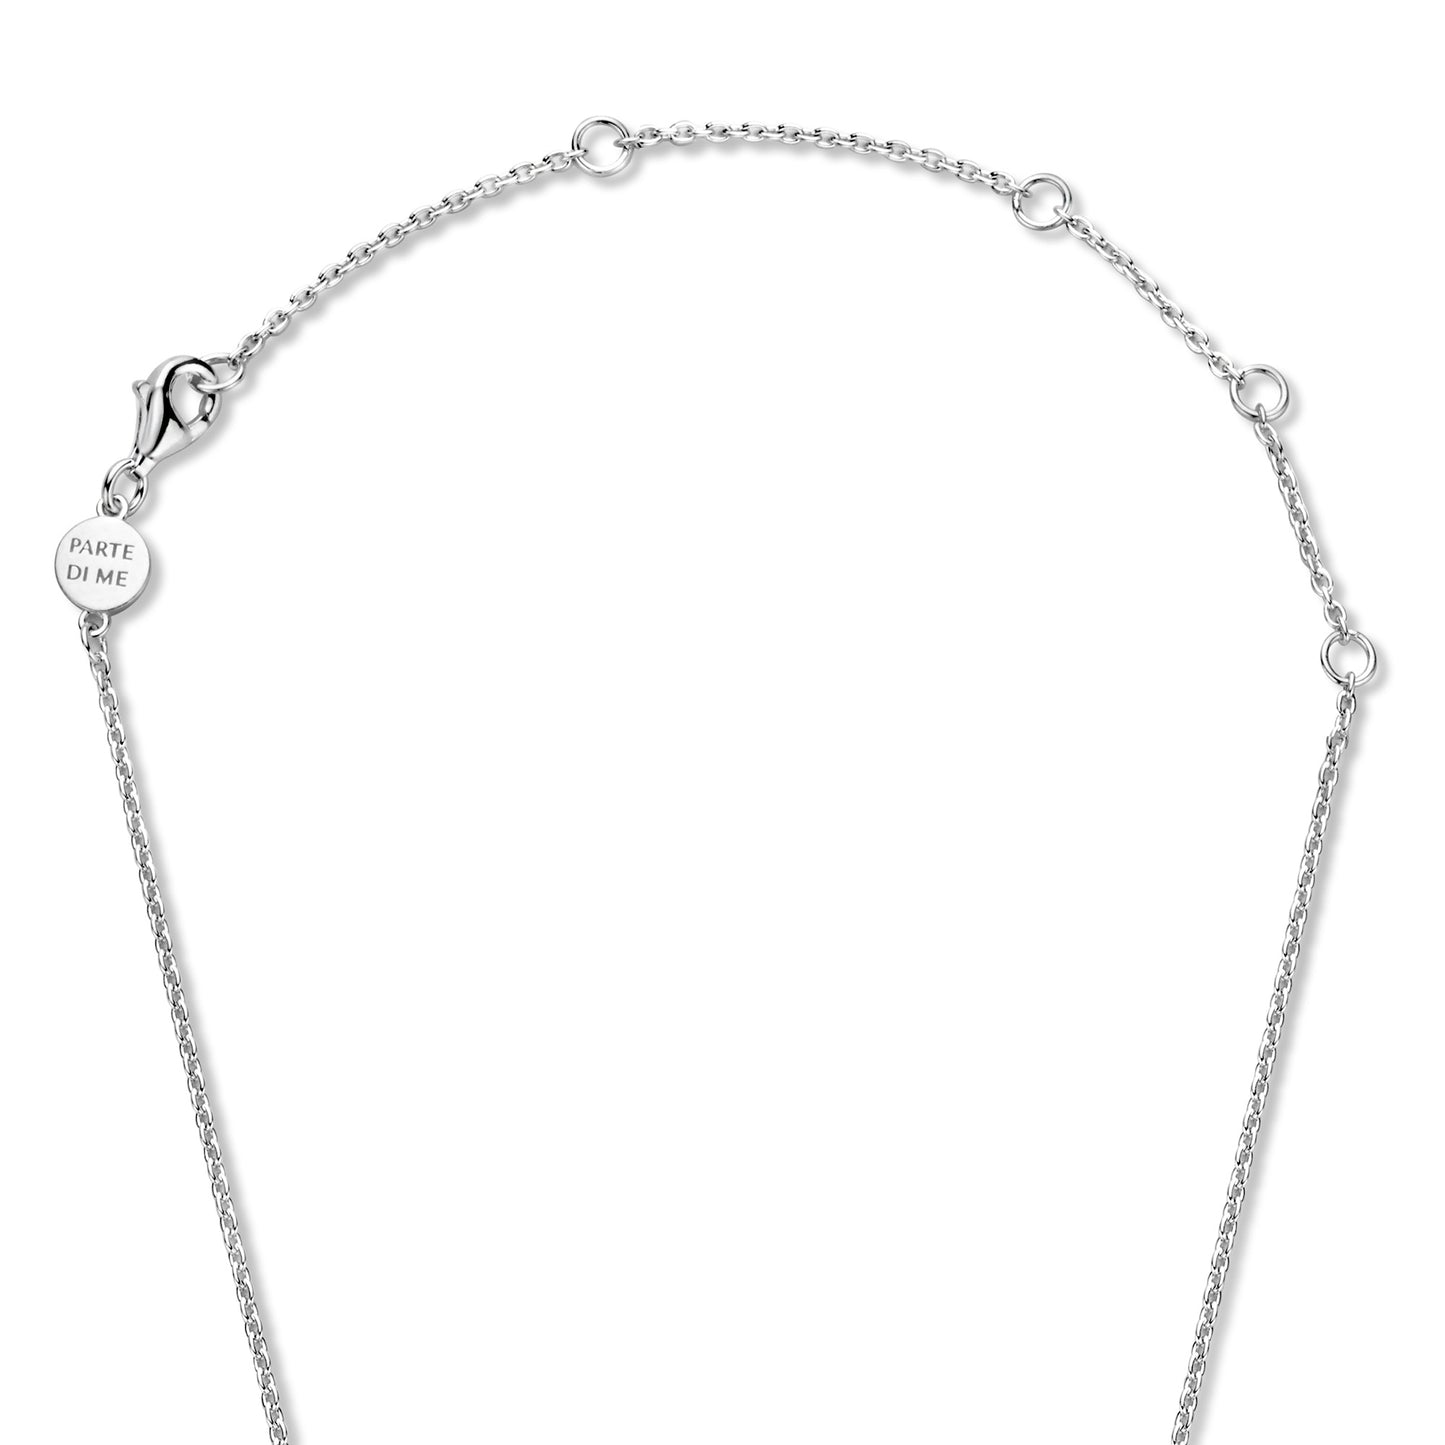 Ponte Vecchio Sofia 925 sterling silver necklace with zirconia stone